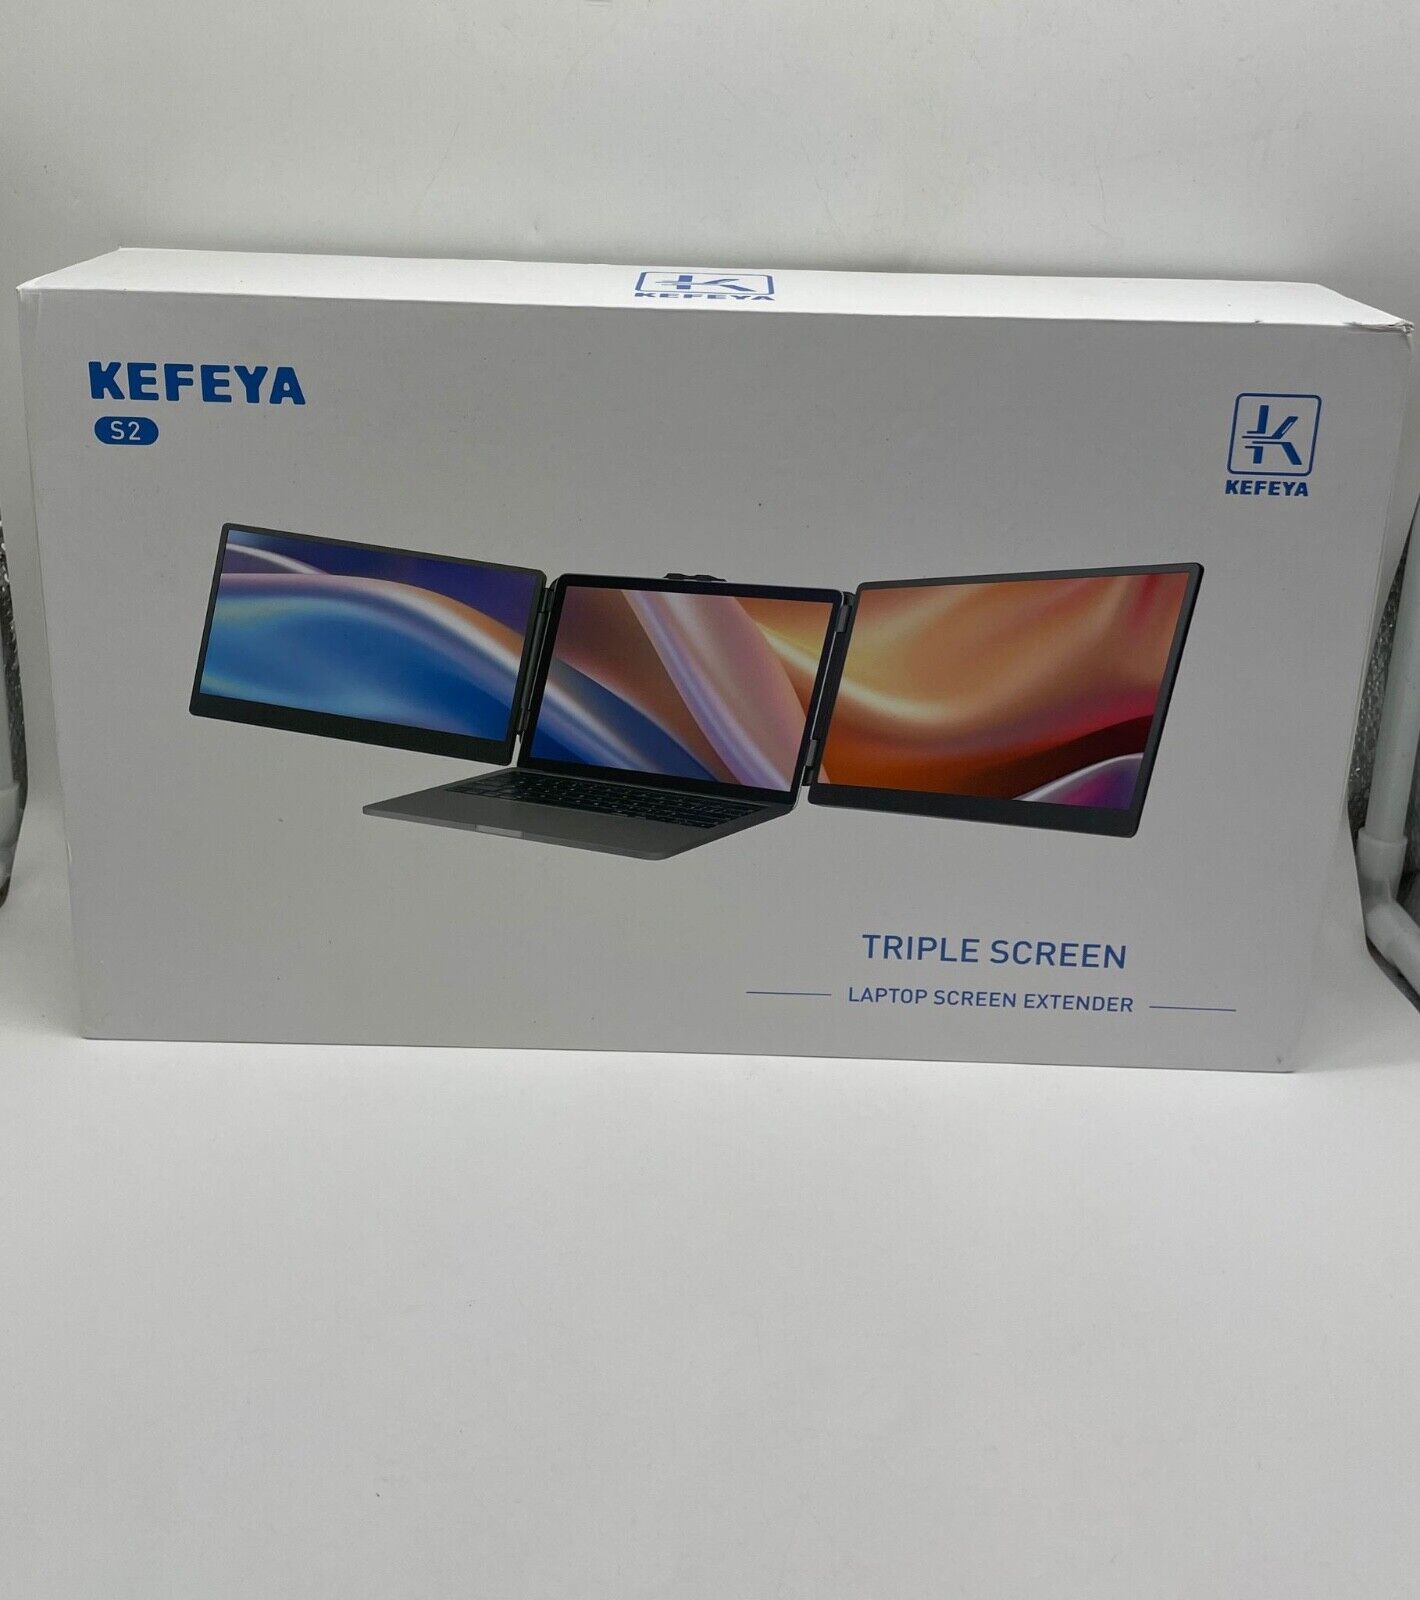 KEFEYA Laptop Screen Extender, 14